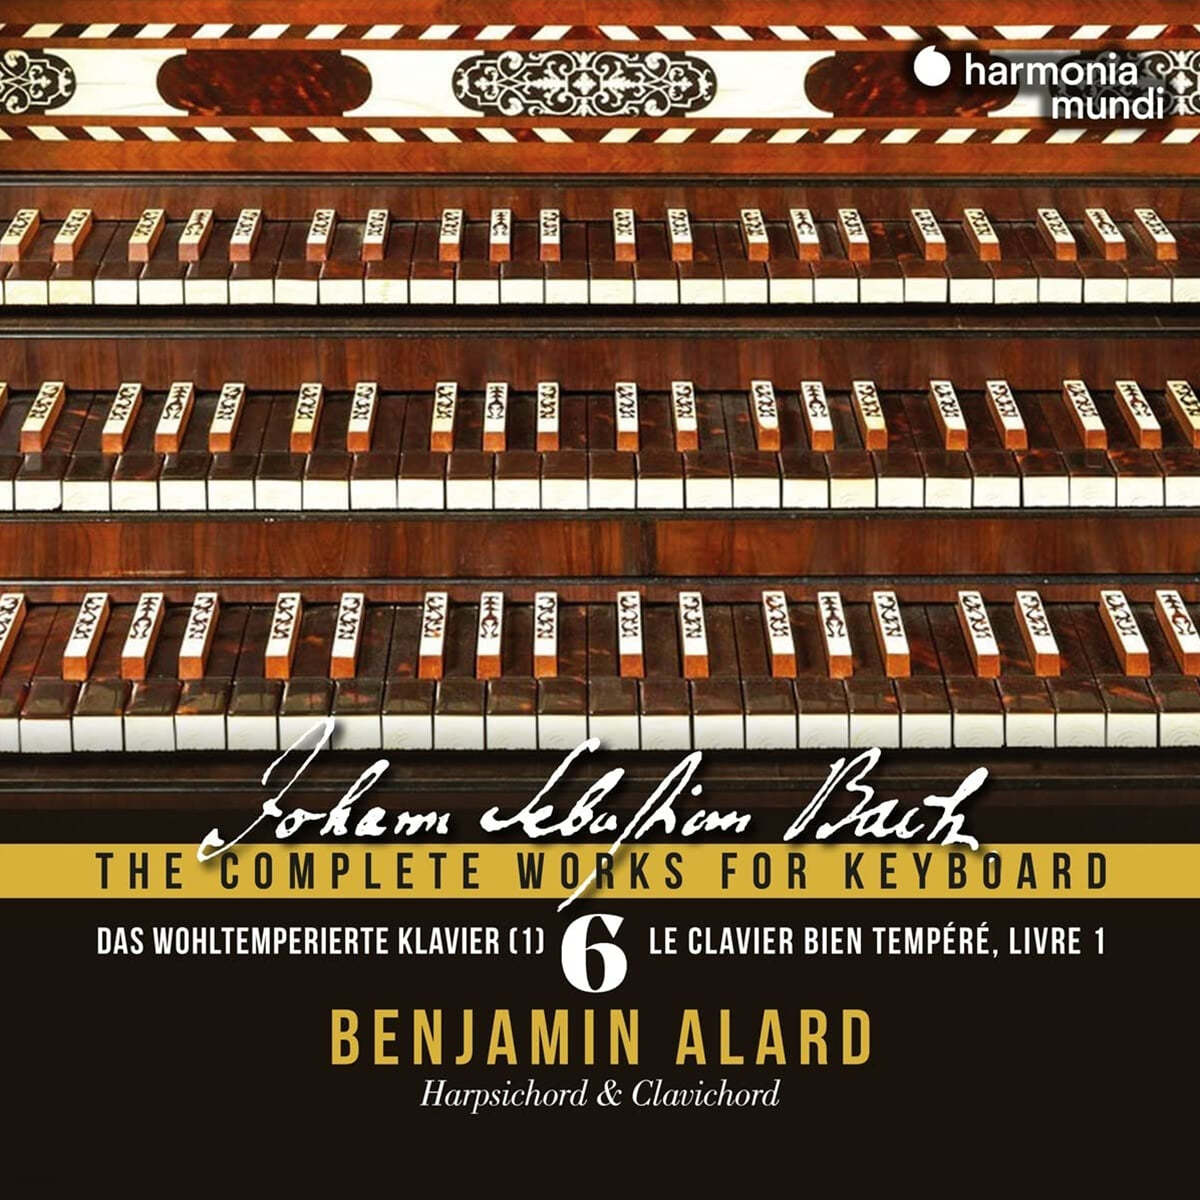 Benjamin Alard 바흐: 건반 음악을 위한 작품 6집 - 평균율 클라비어 곡 1권 